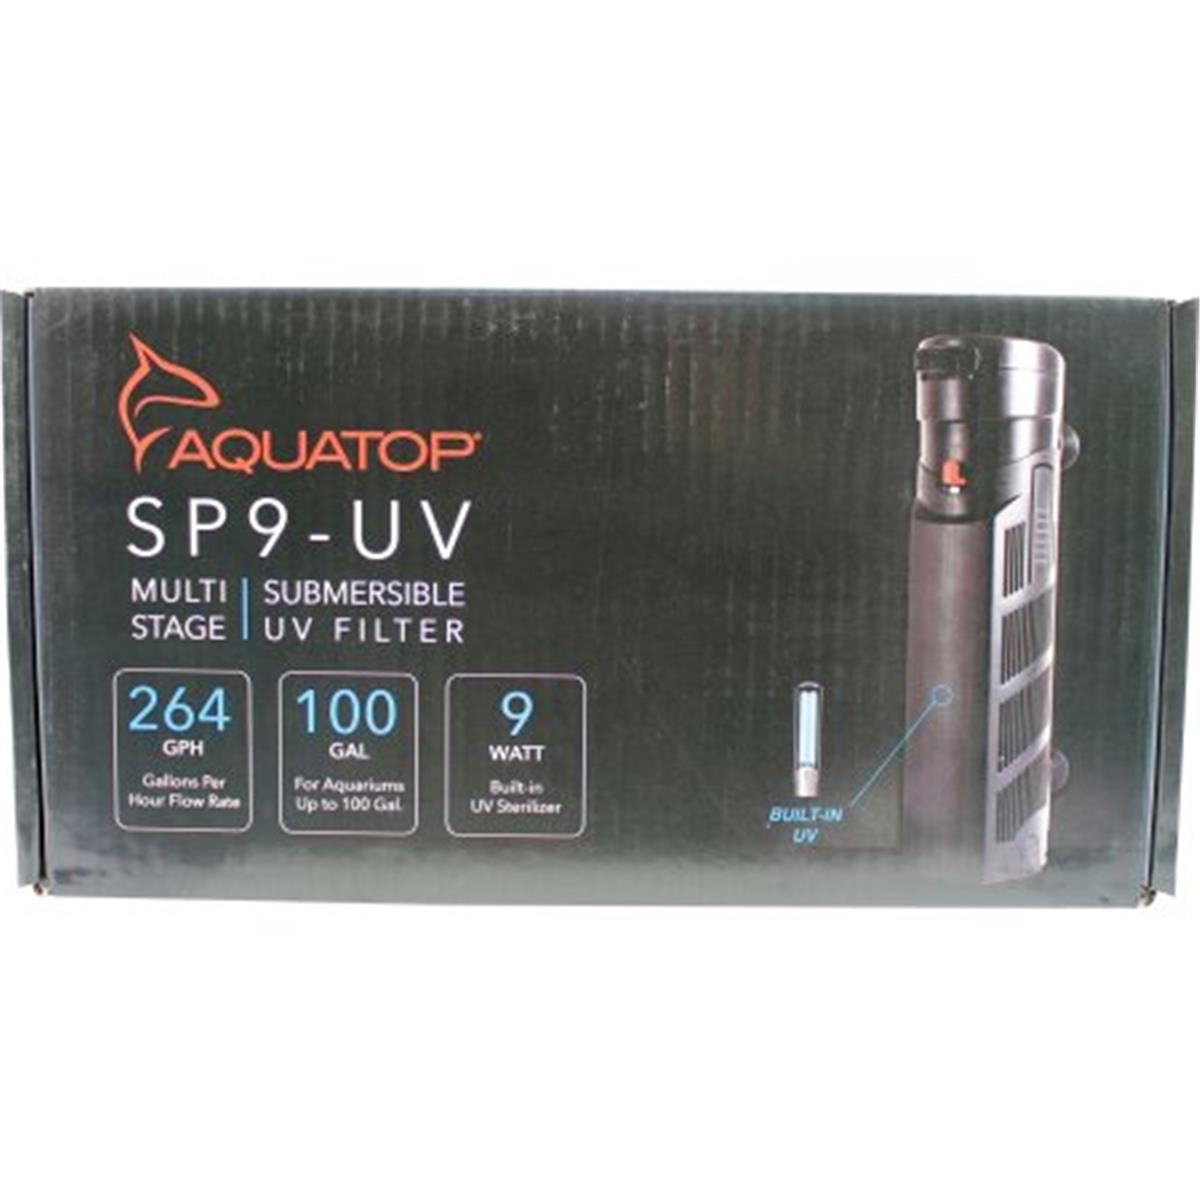 Picture of Aquatop Aquatic Supplies 003560 264 gph Multi Stage Submersible UV Filter - Black